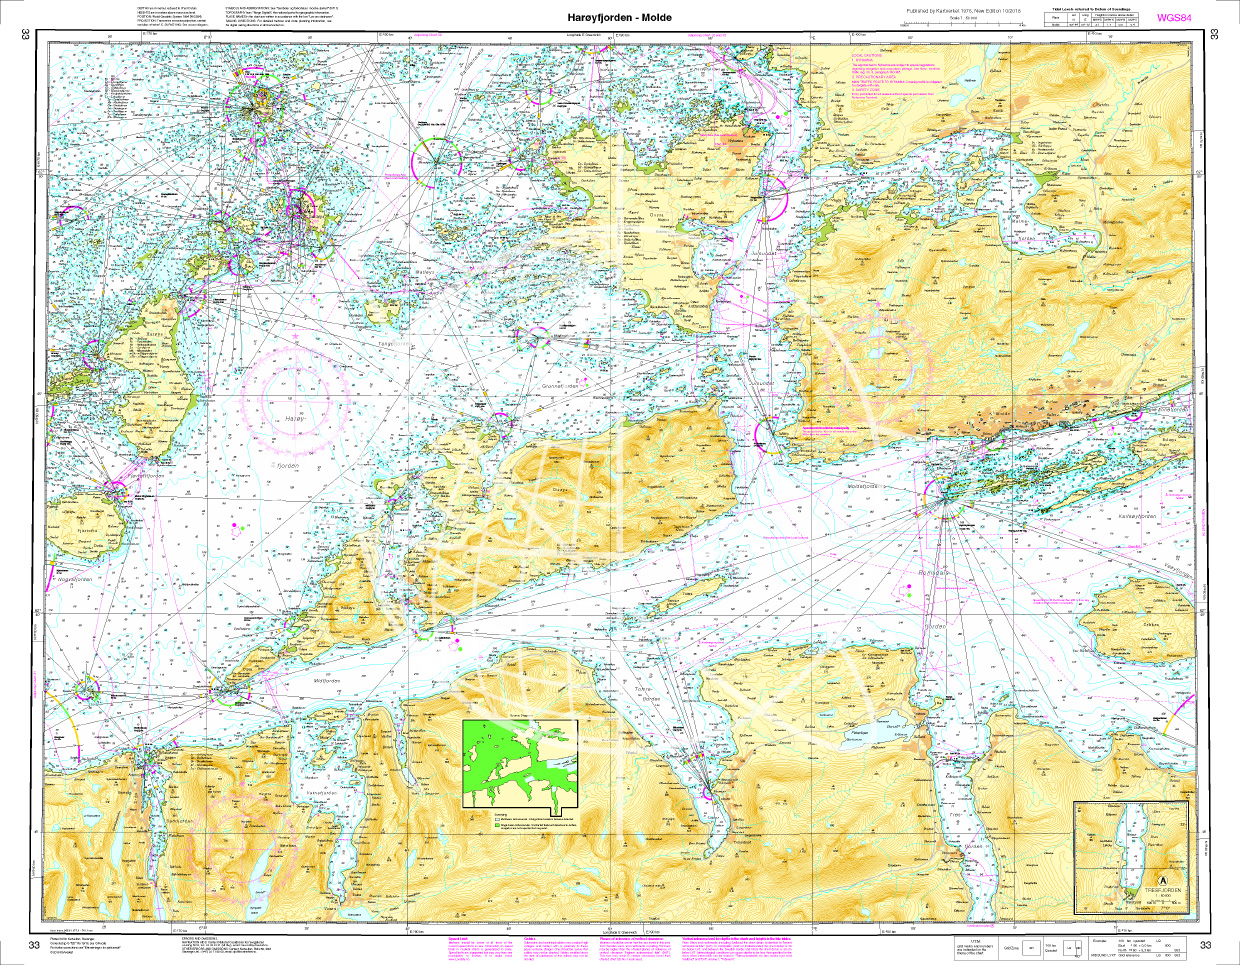 Norwegen N 33 Atlantik Harøyfjord bis Molde